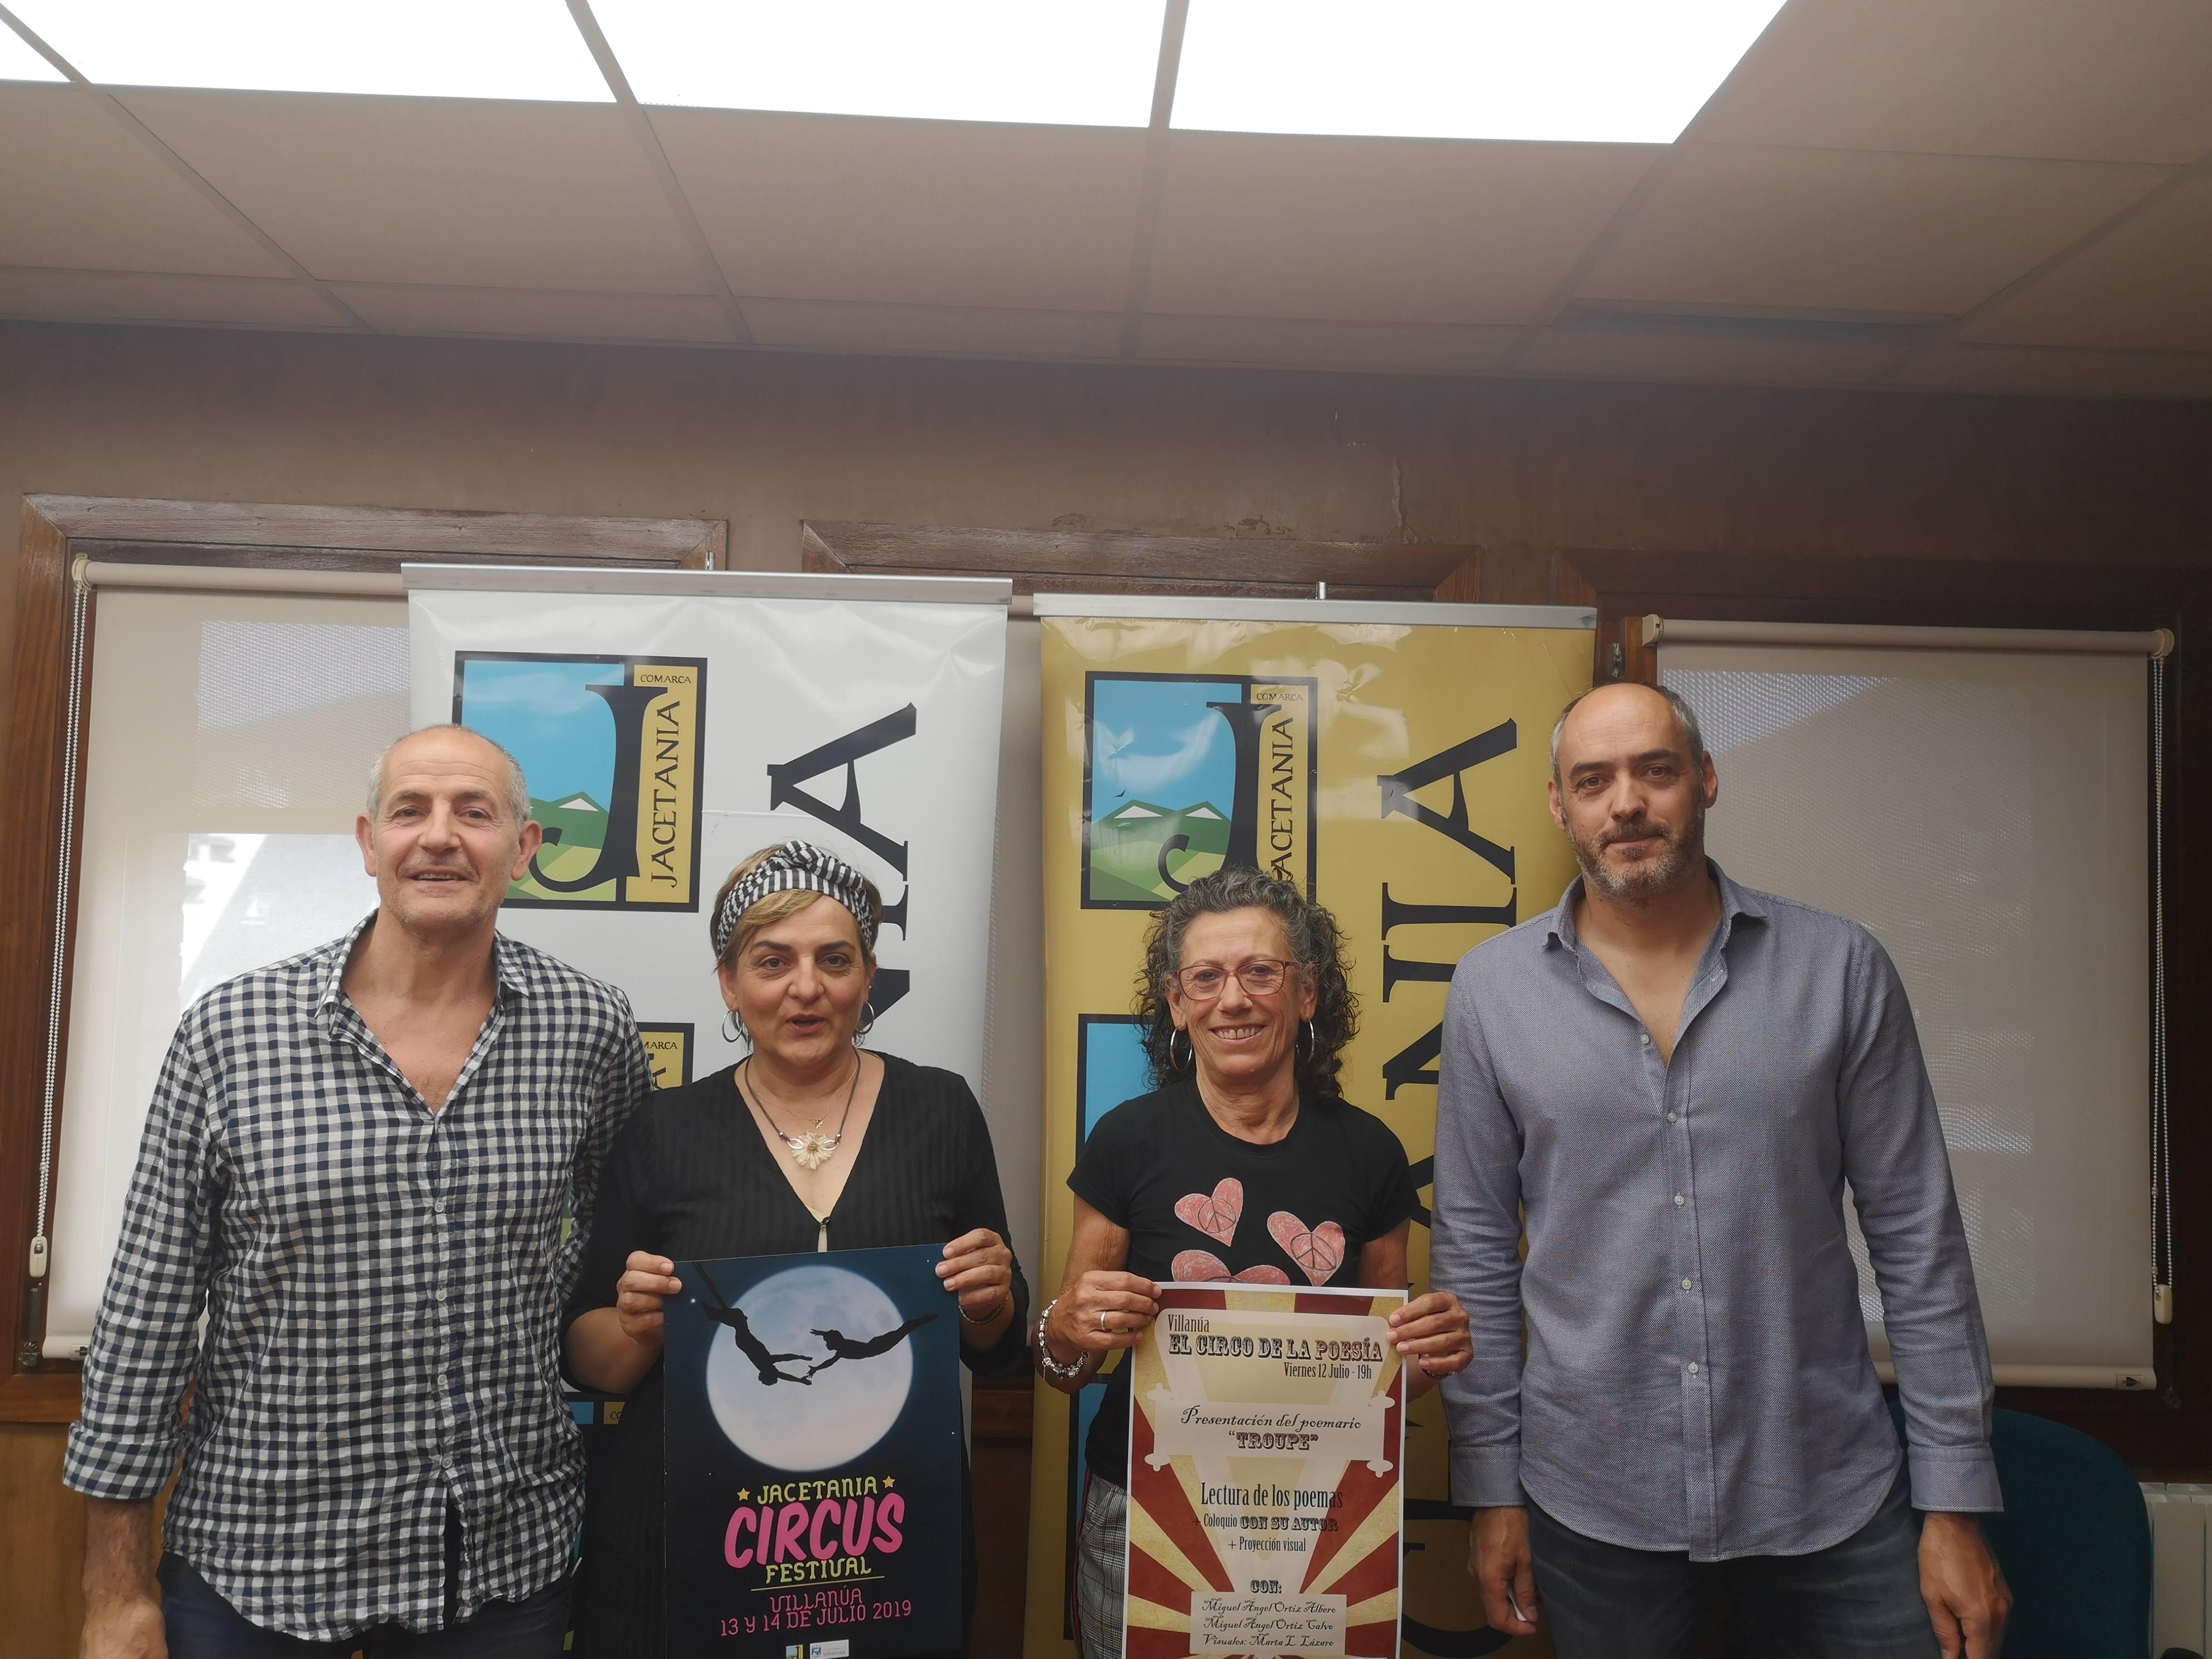 Jacetania Circus Festival volverá a mostrar la magia del circo en Villanúa